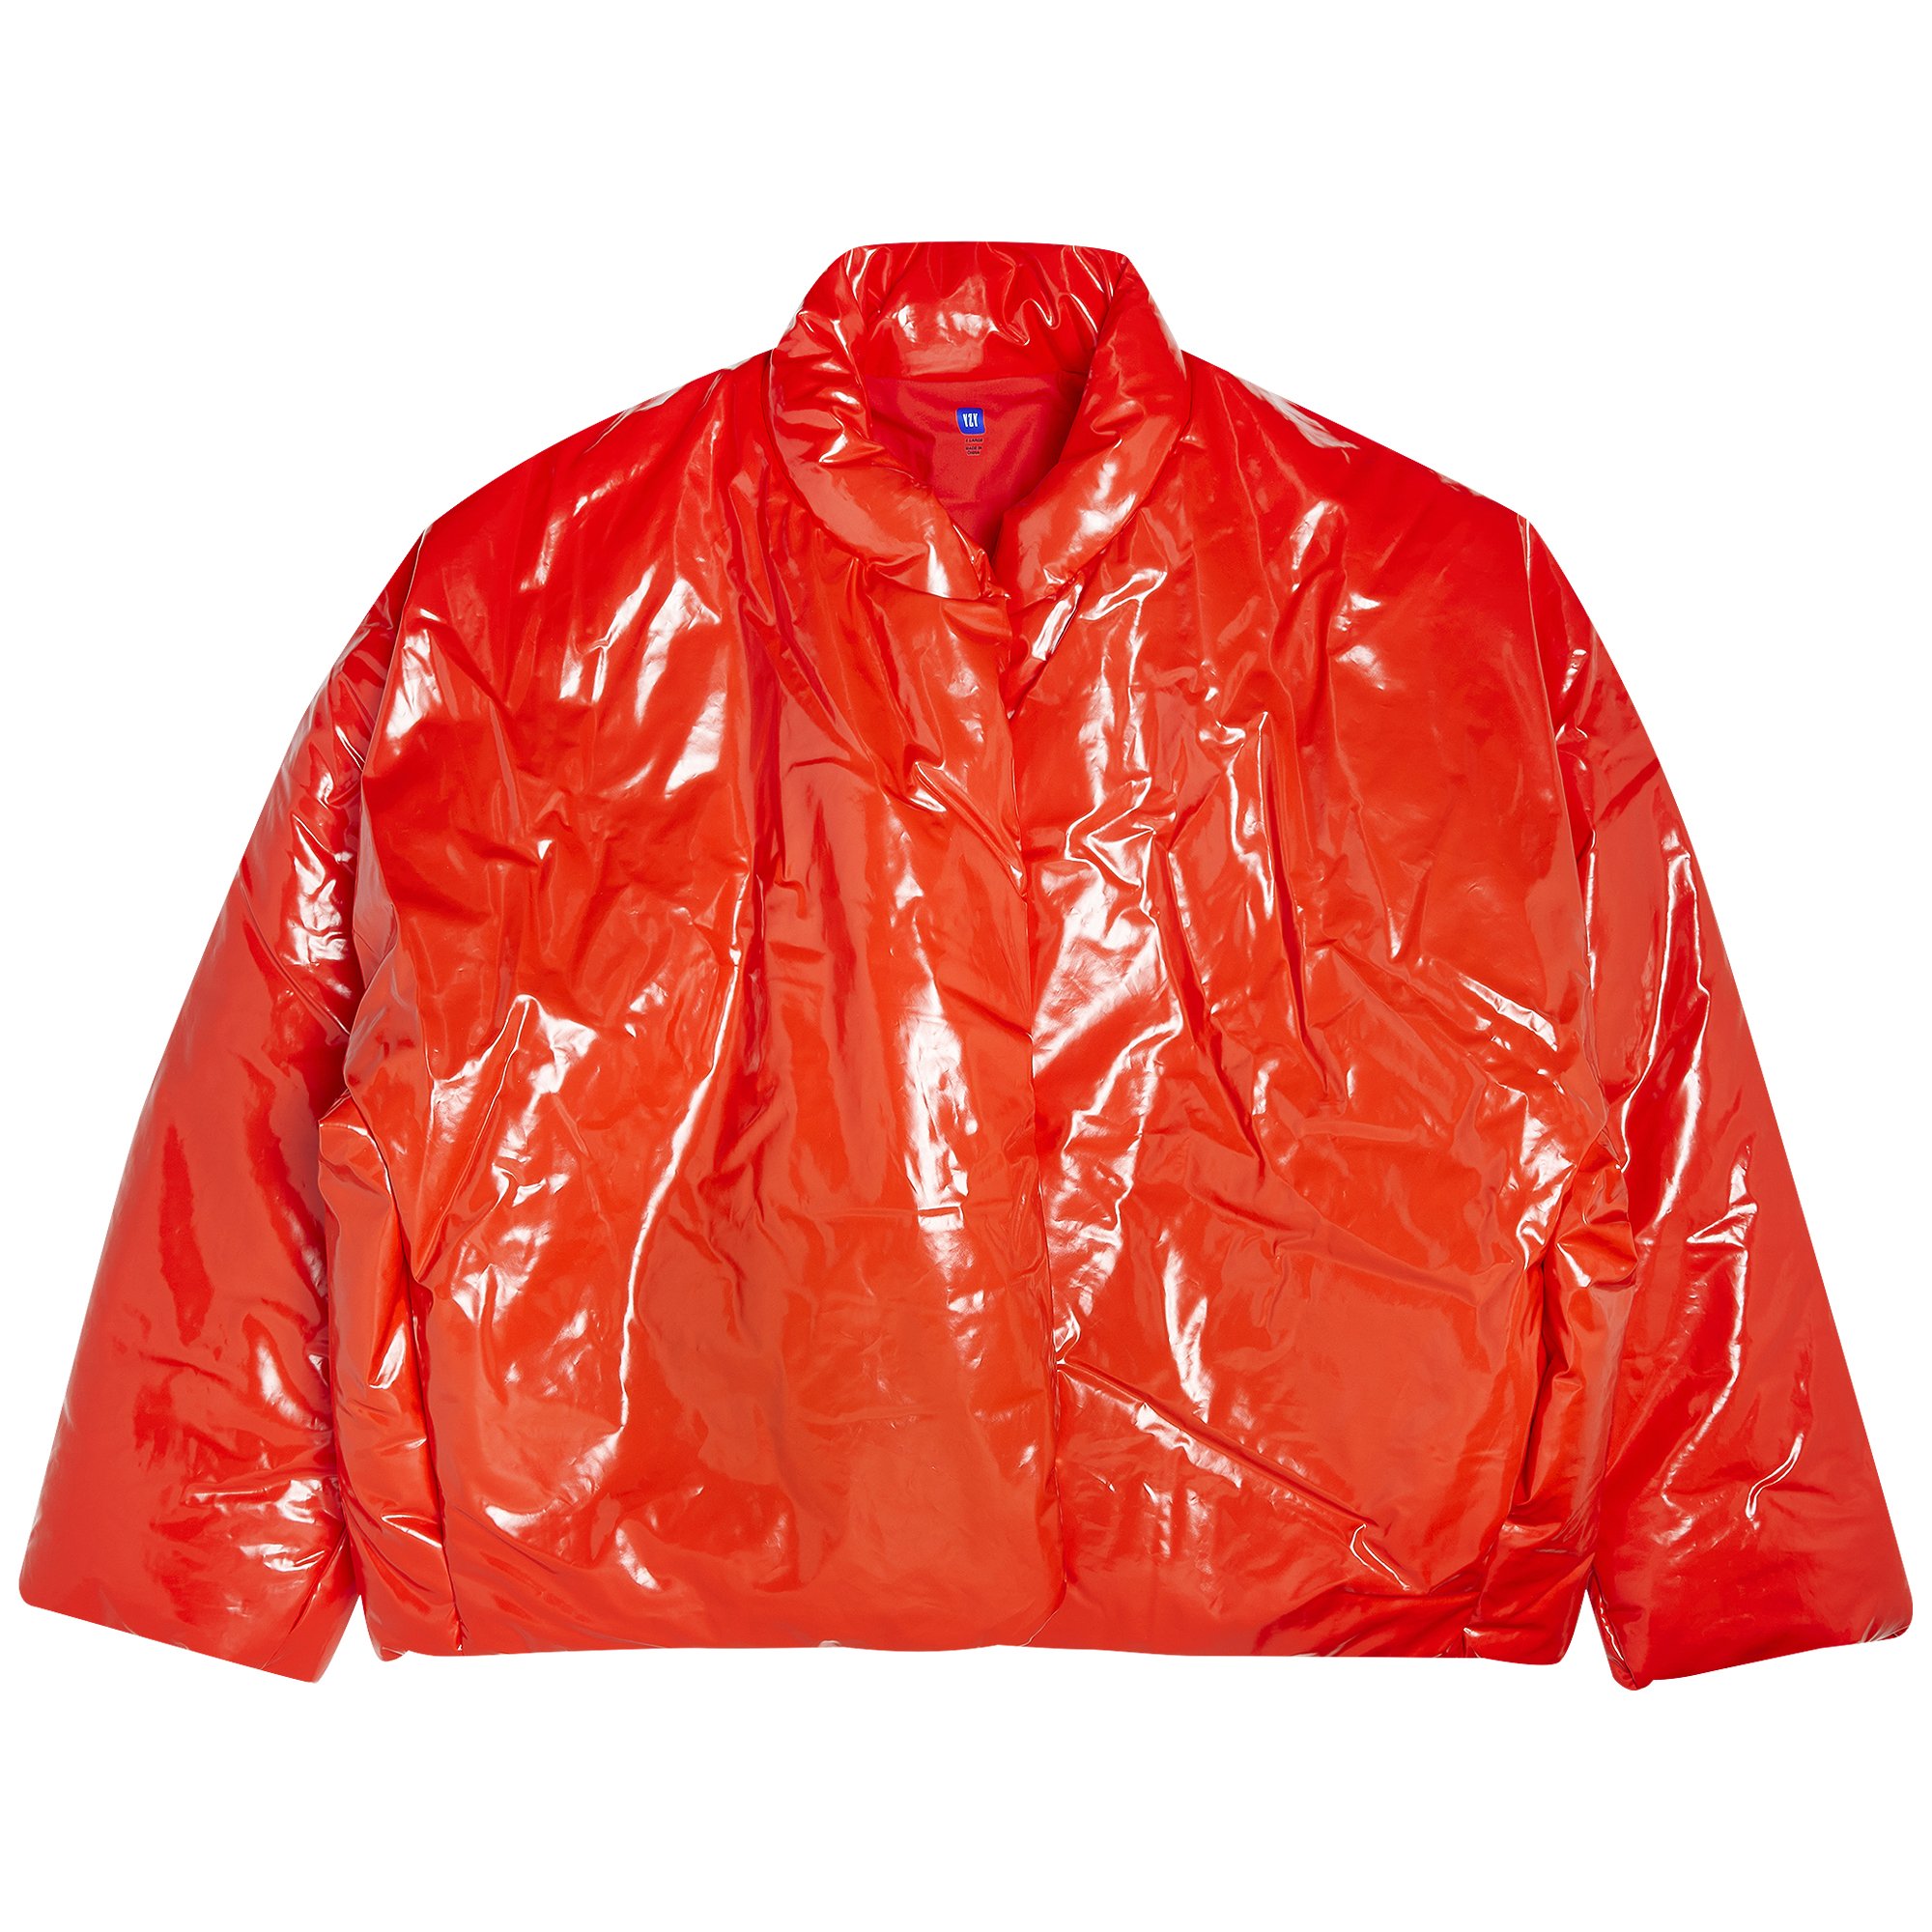 Buy Yeezy Gap Round Jacket 'Red' - 8408190020000 | GOAT